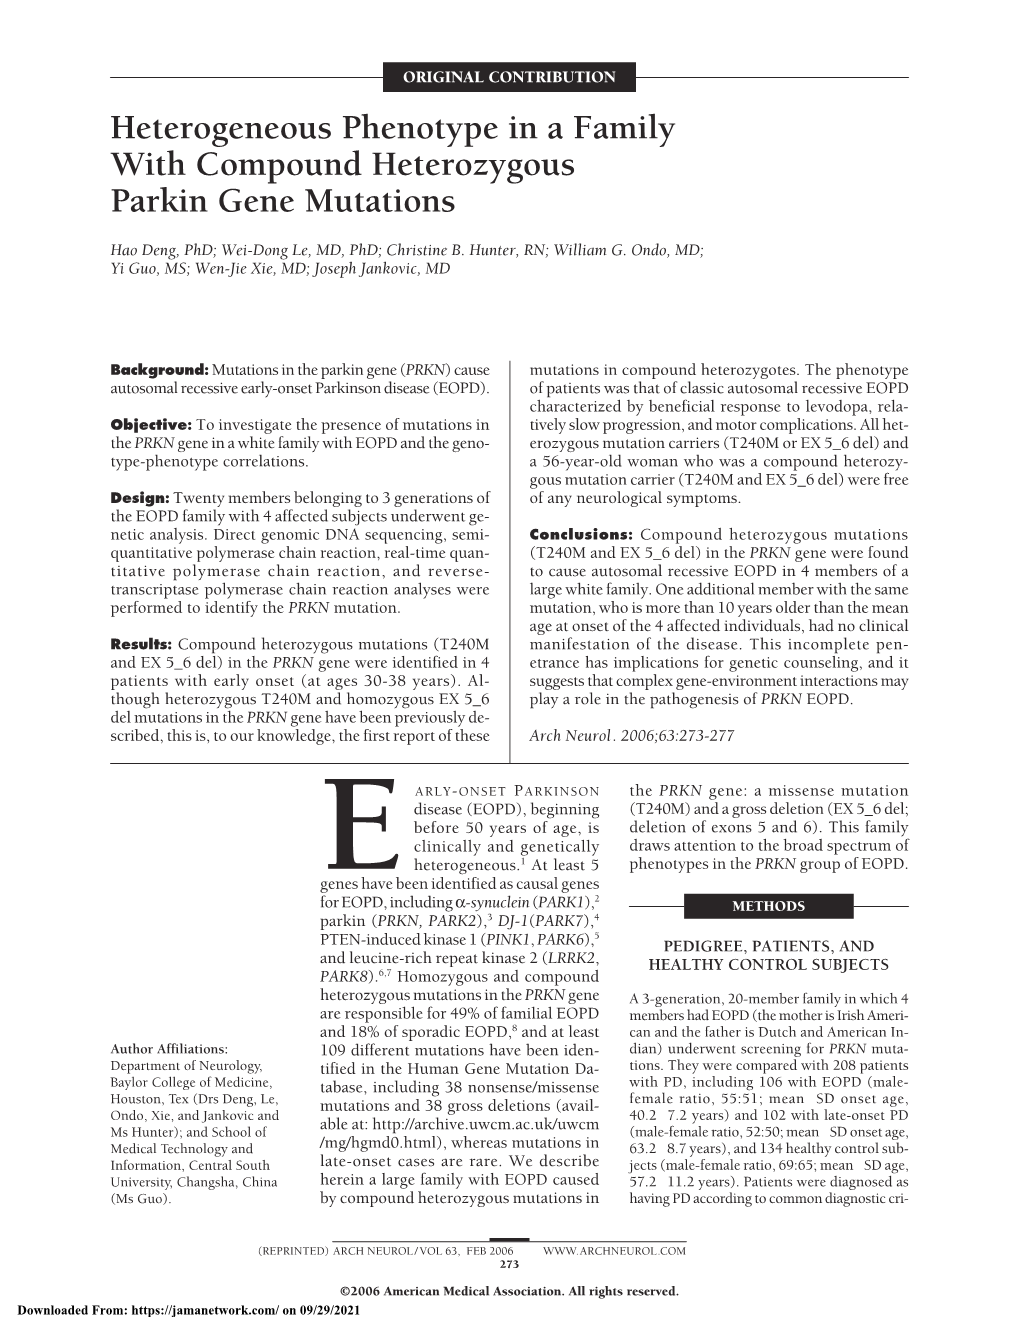 Heterogeneous Phenotype in a Family with Compound Heterozygous Parkin Gene Mutations